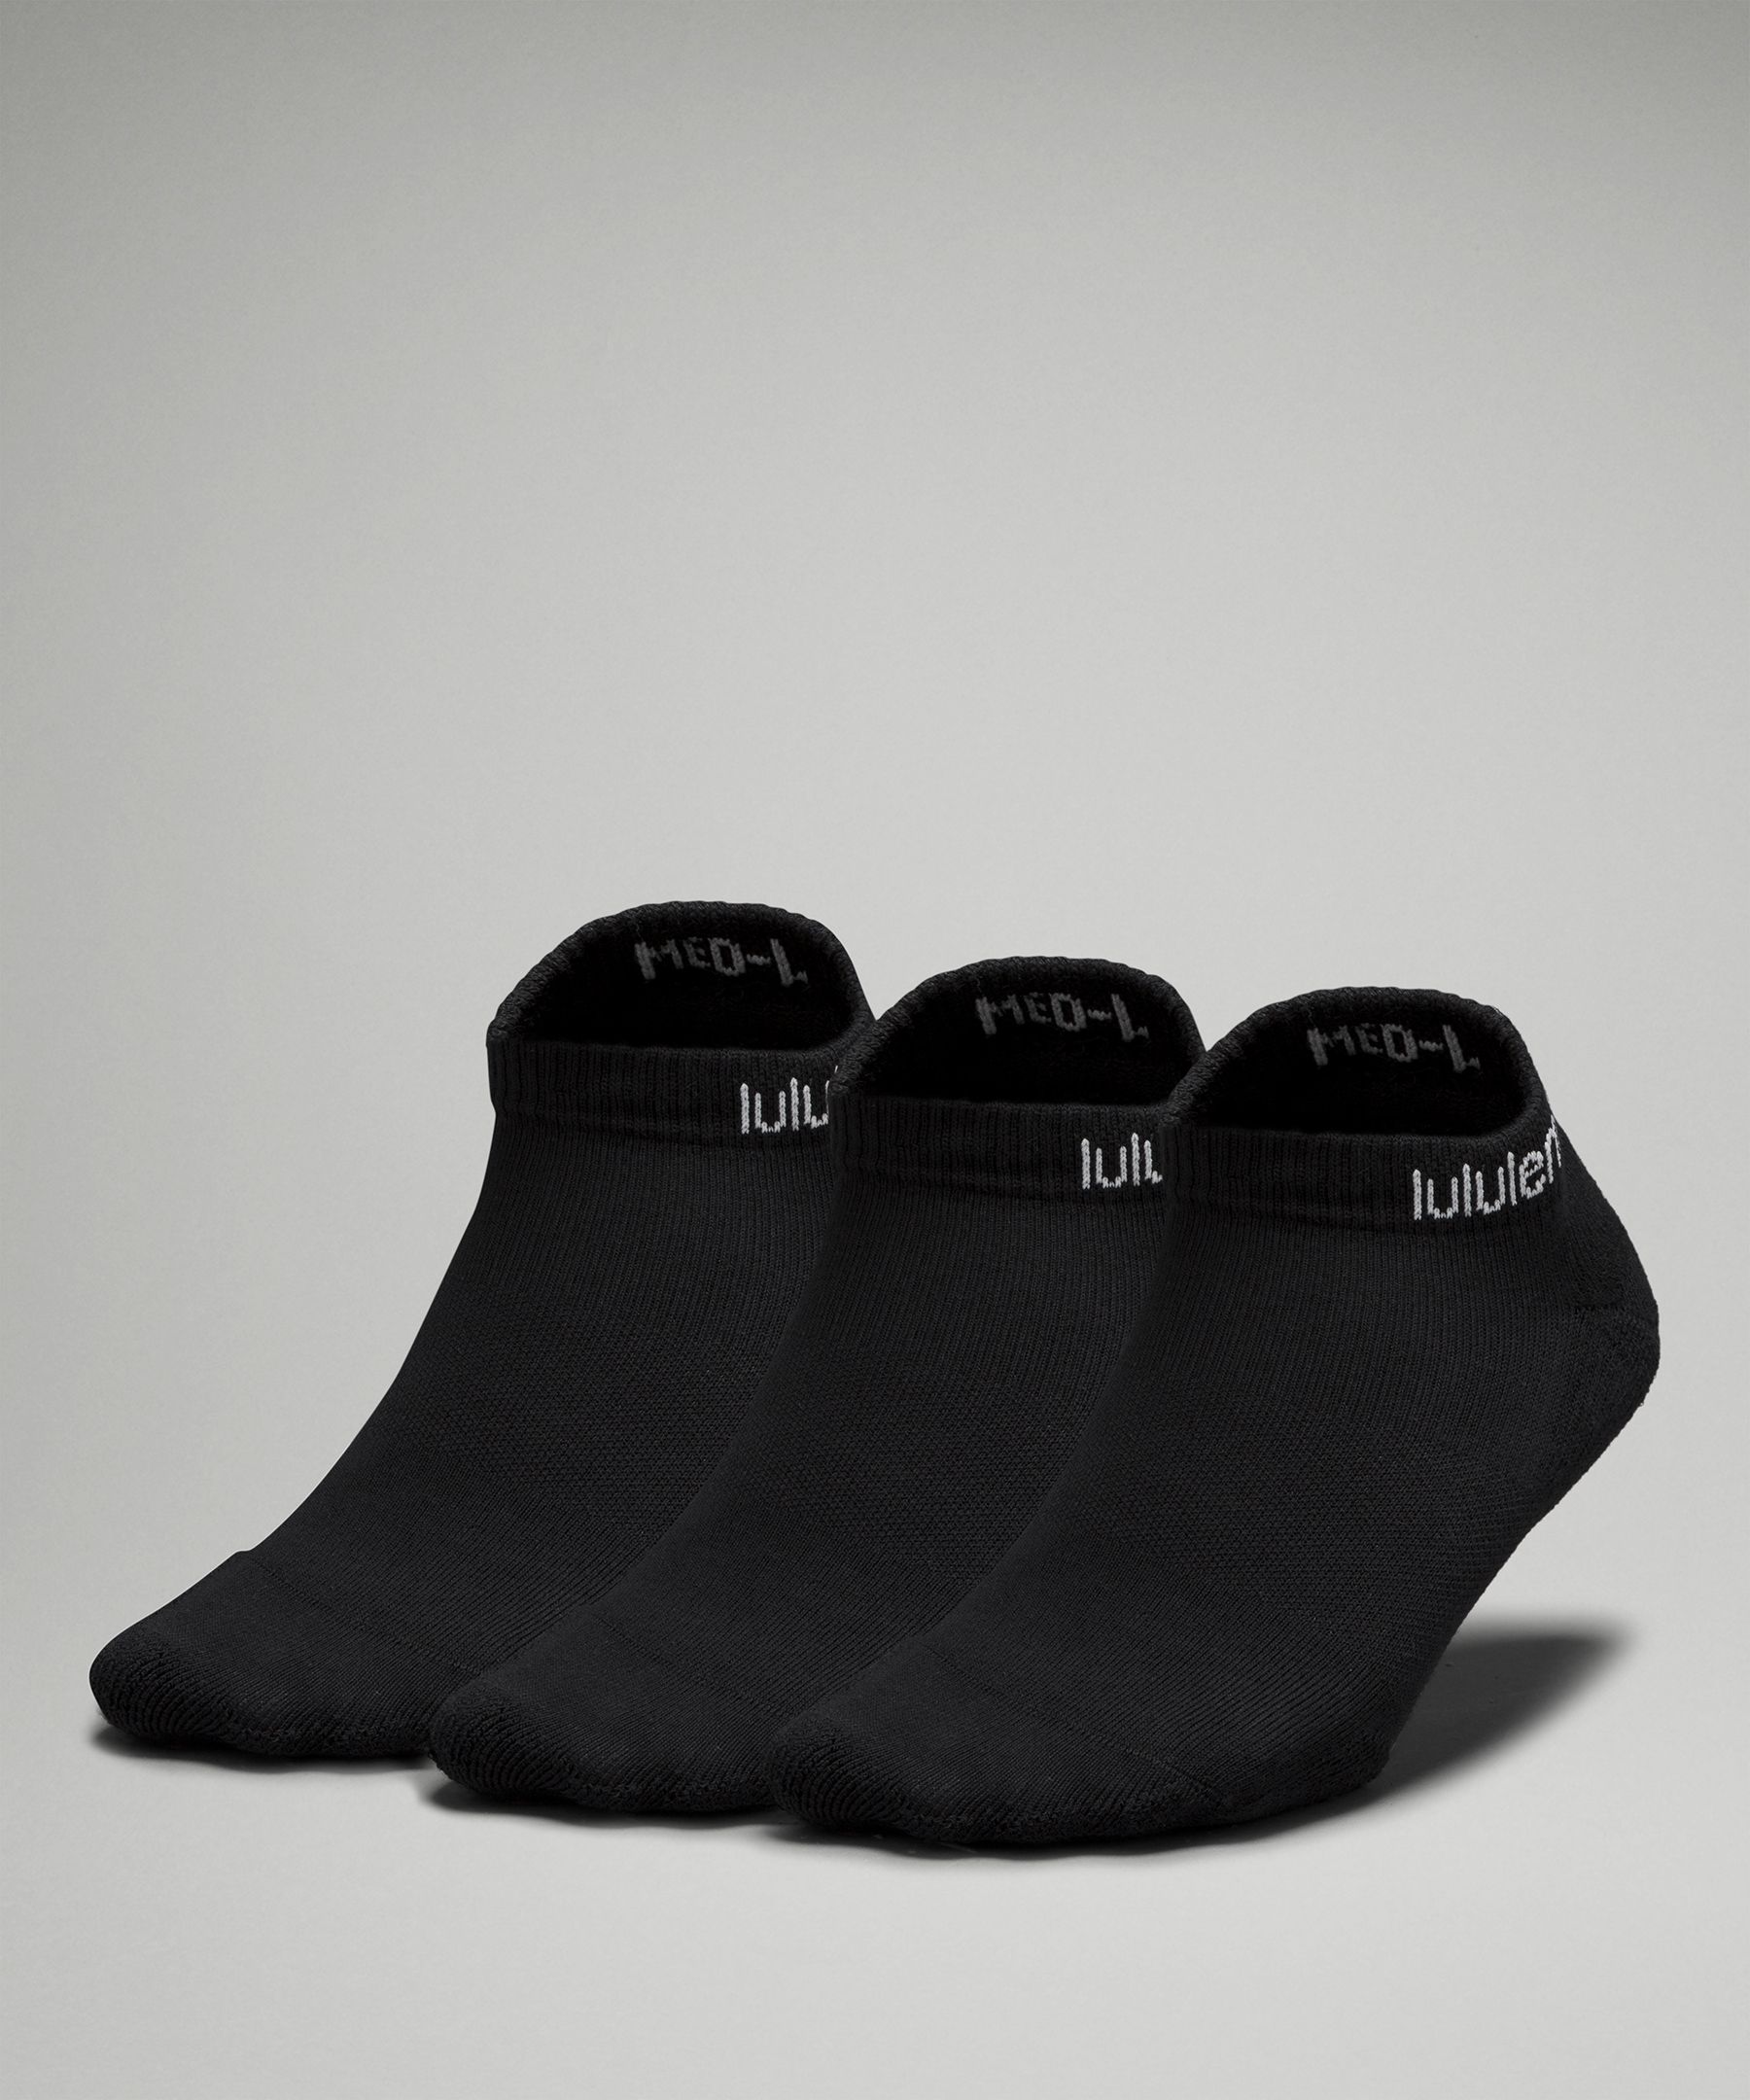 Lululemon Daily Stride Comfort Ankle Socks 3 Pack